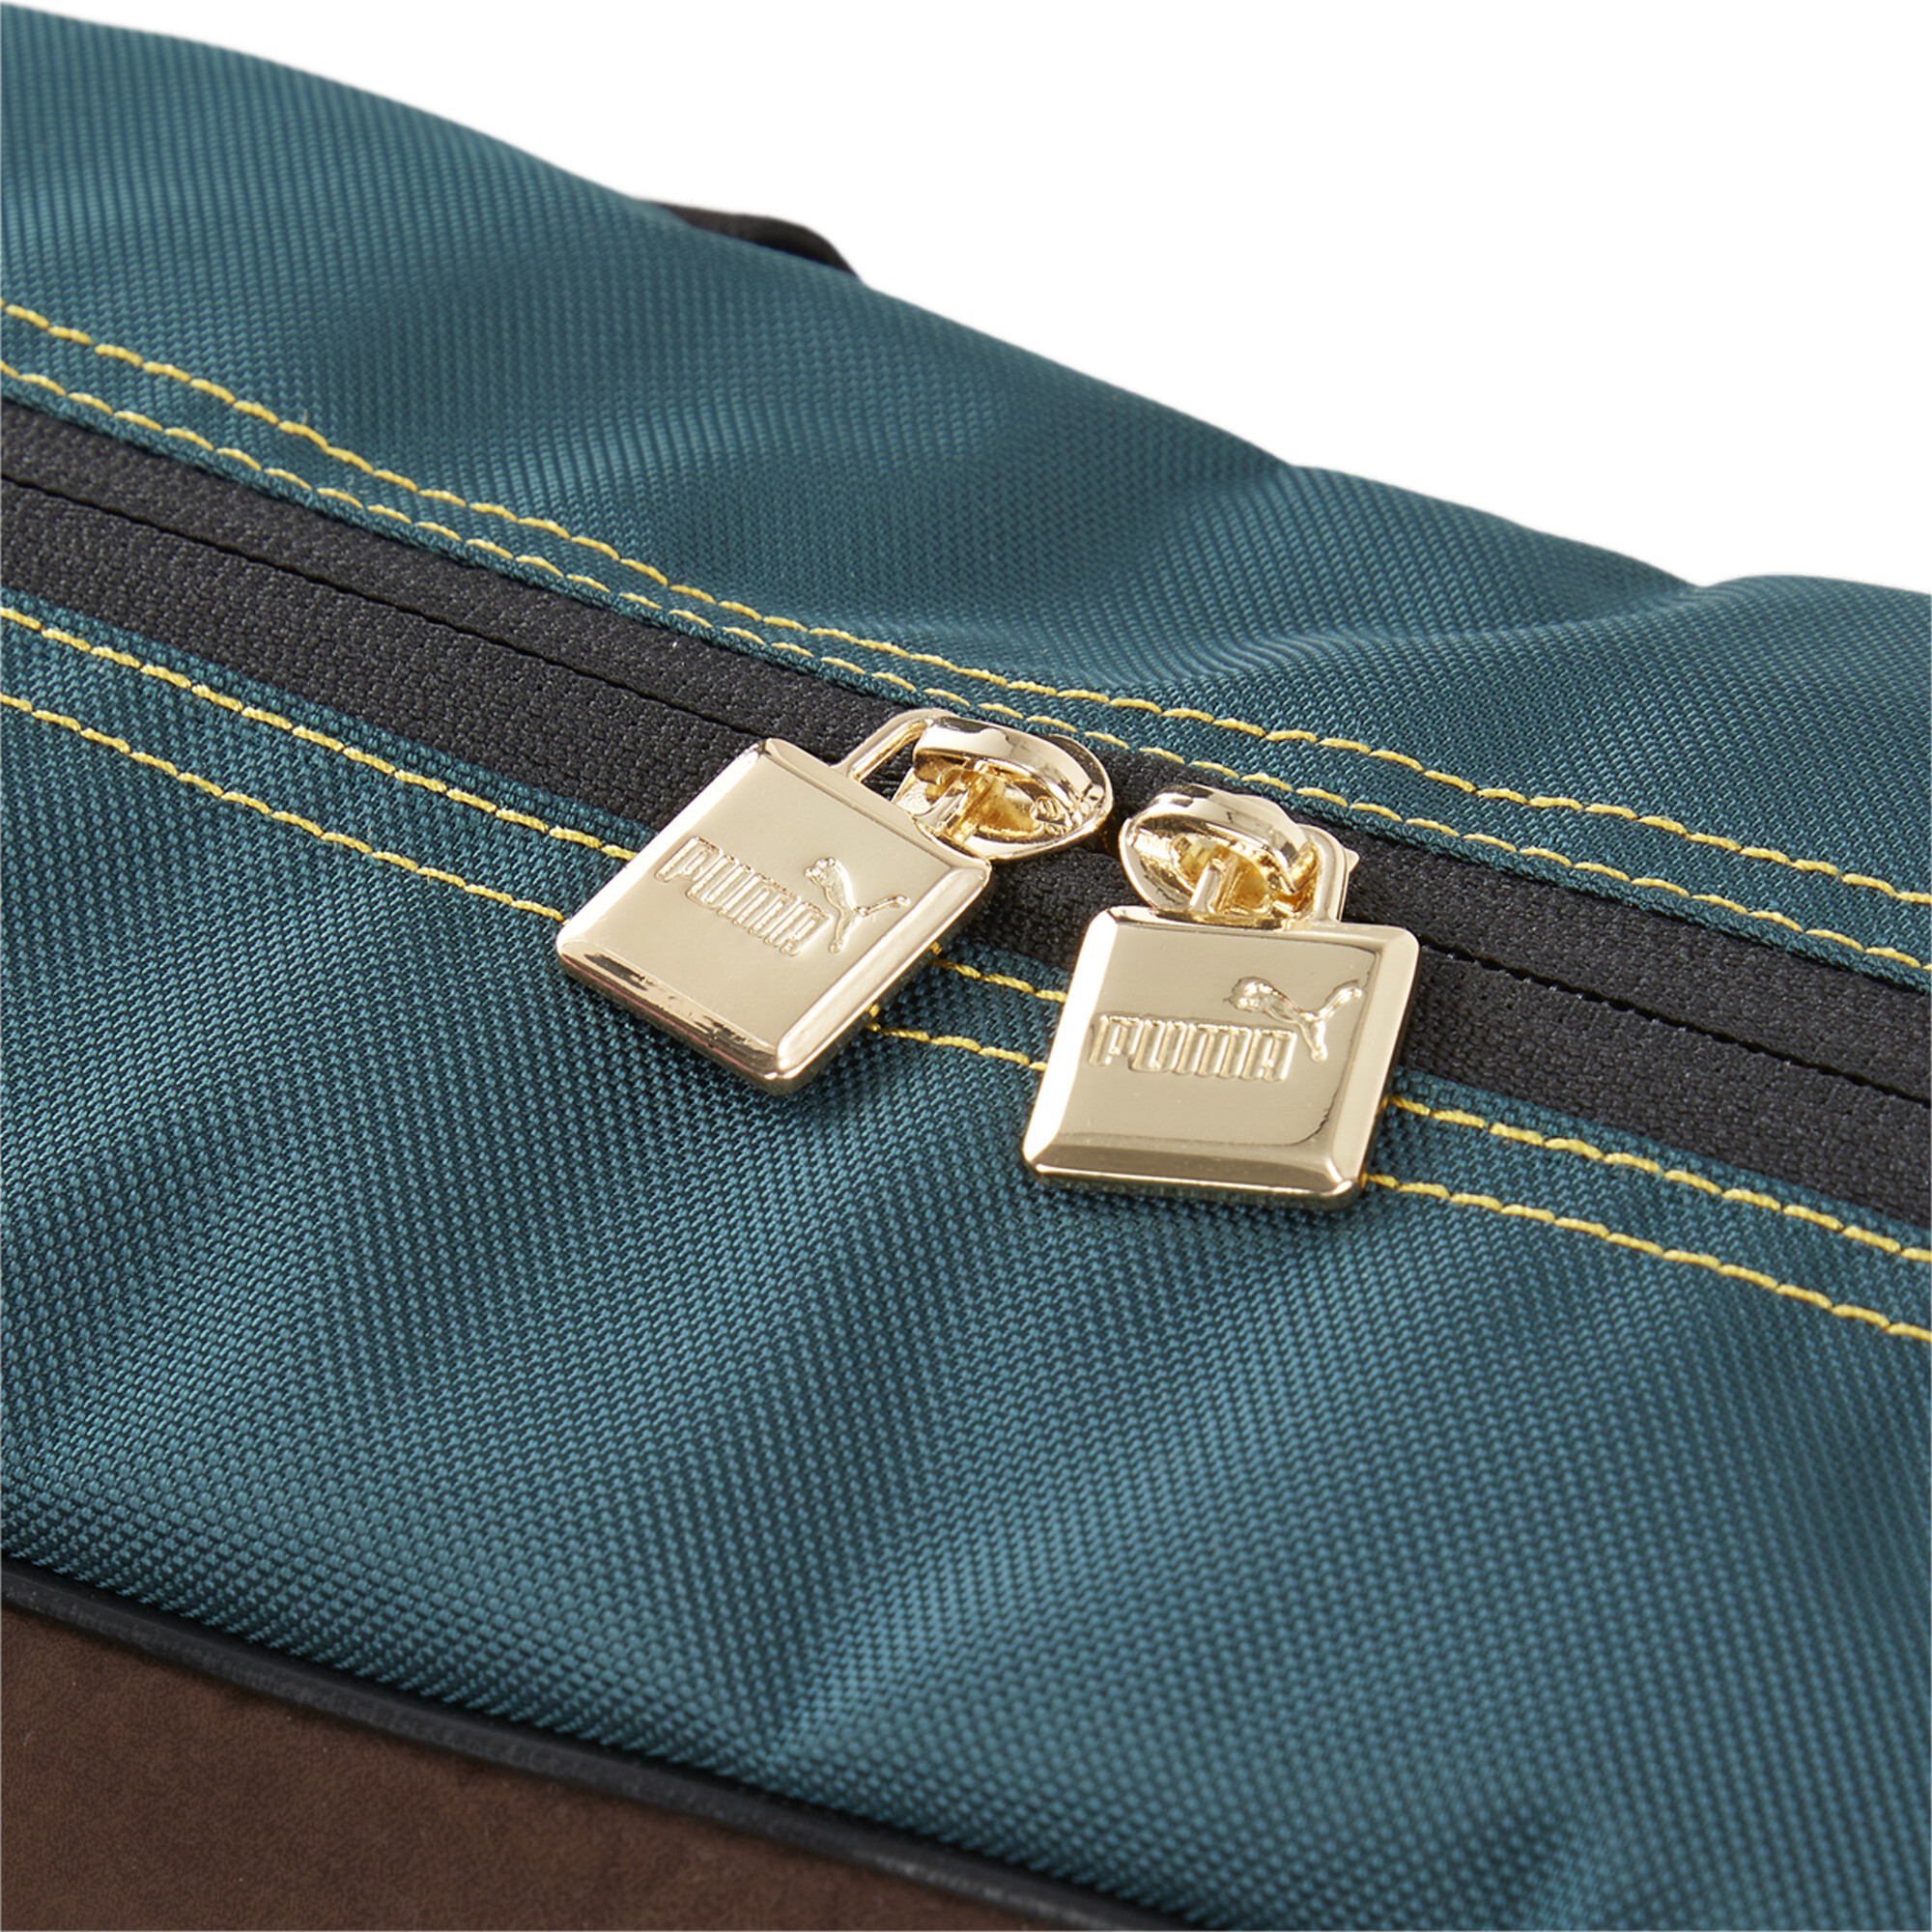 Men's PUMA X STAPLE Duffle Bag In 40 - Green